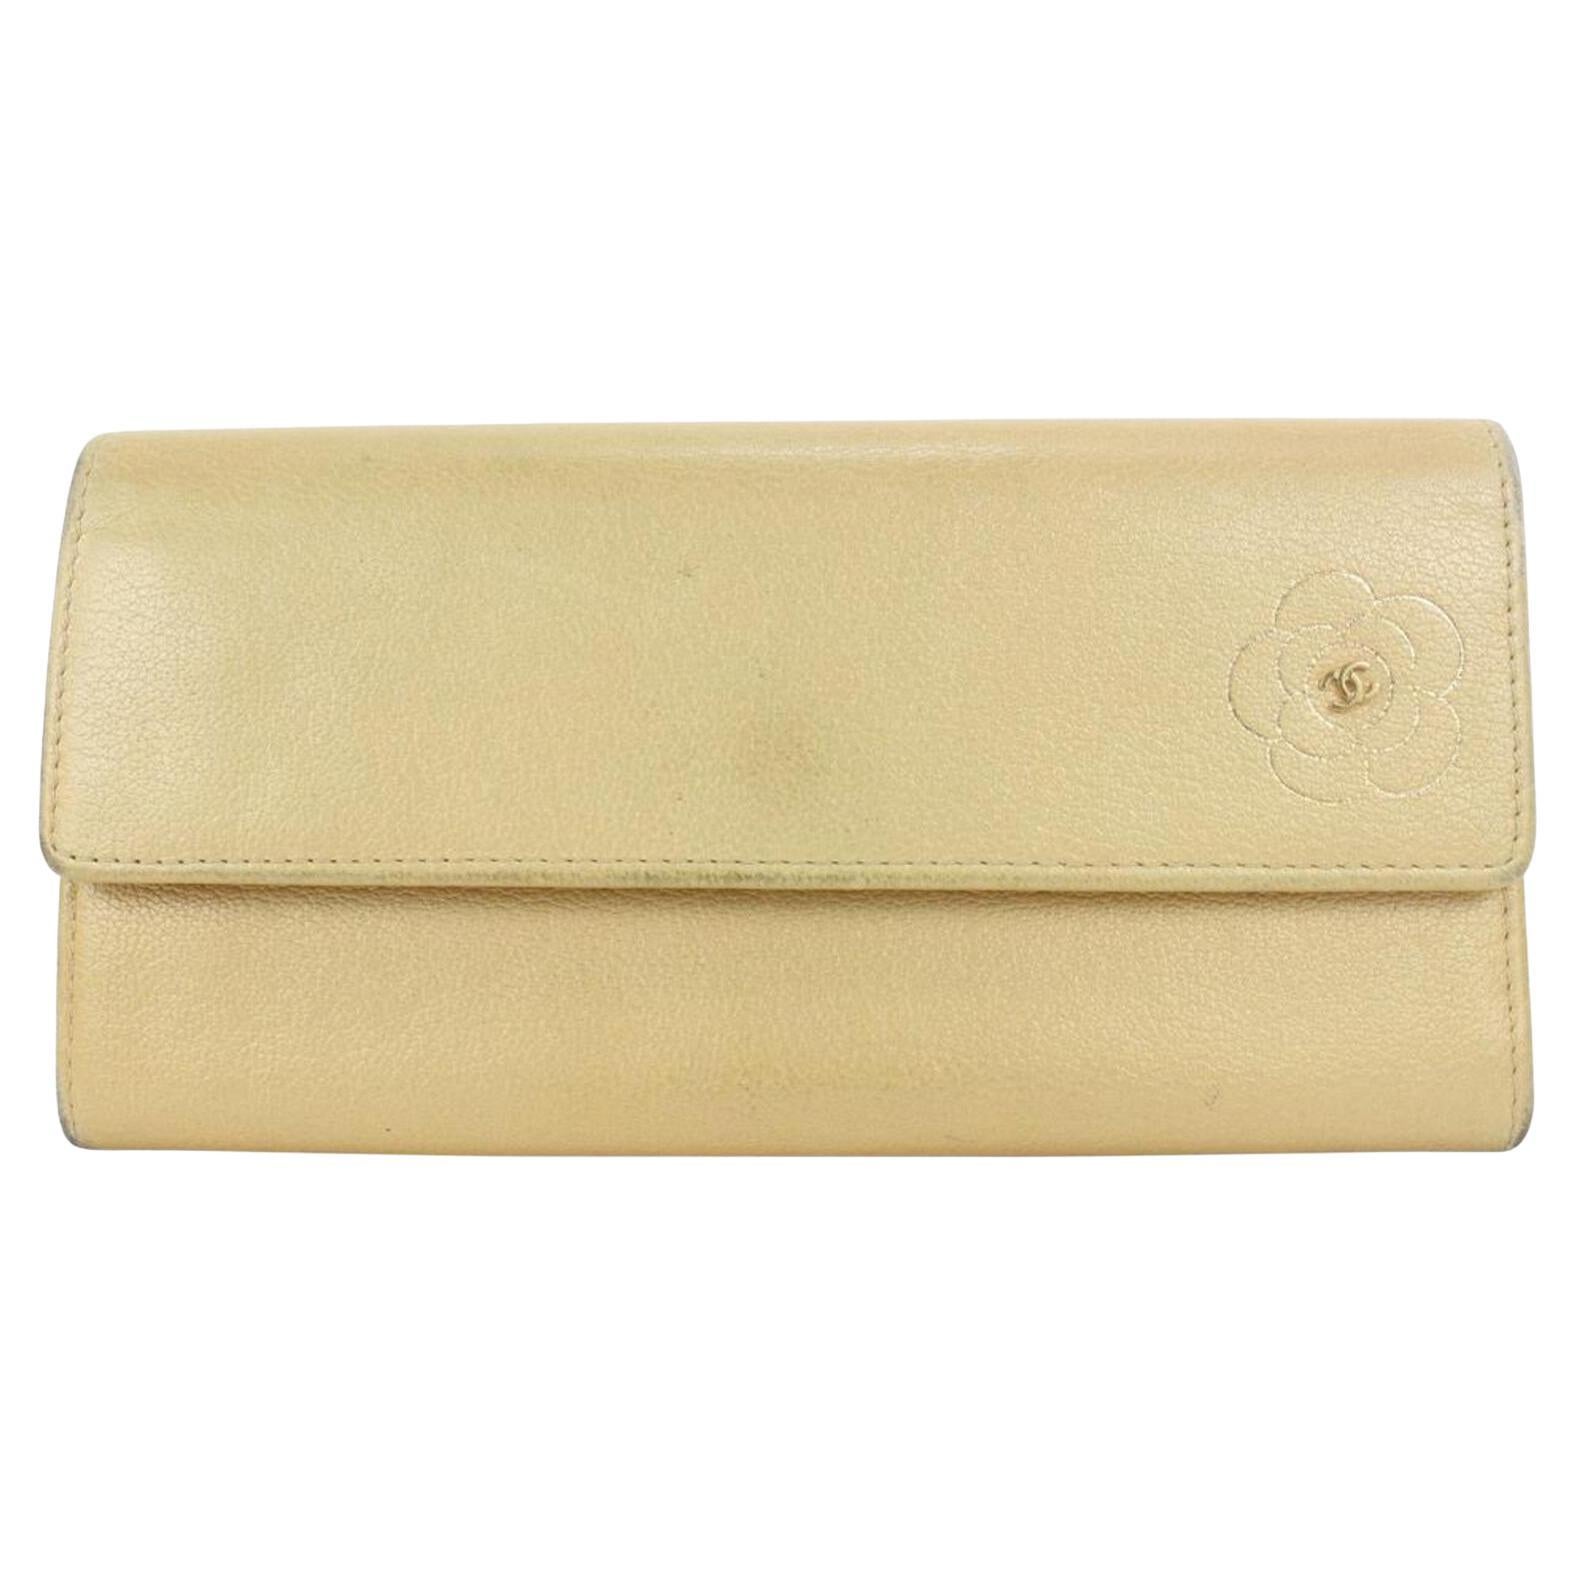 Chanel Beige Gold Leather CC Camelia Flap Wallet7ccs111 For Sale